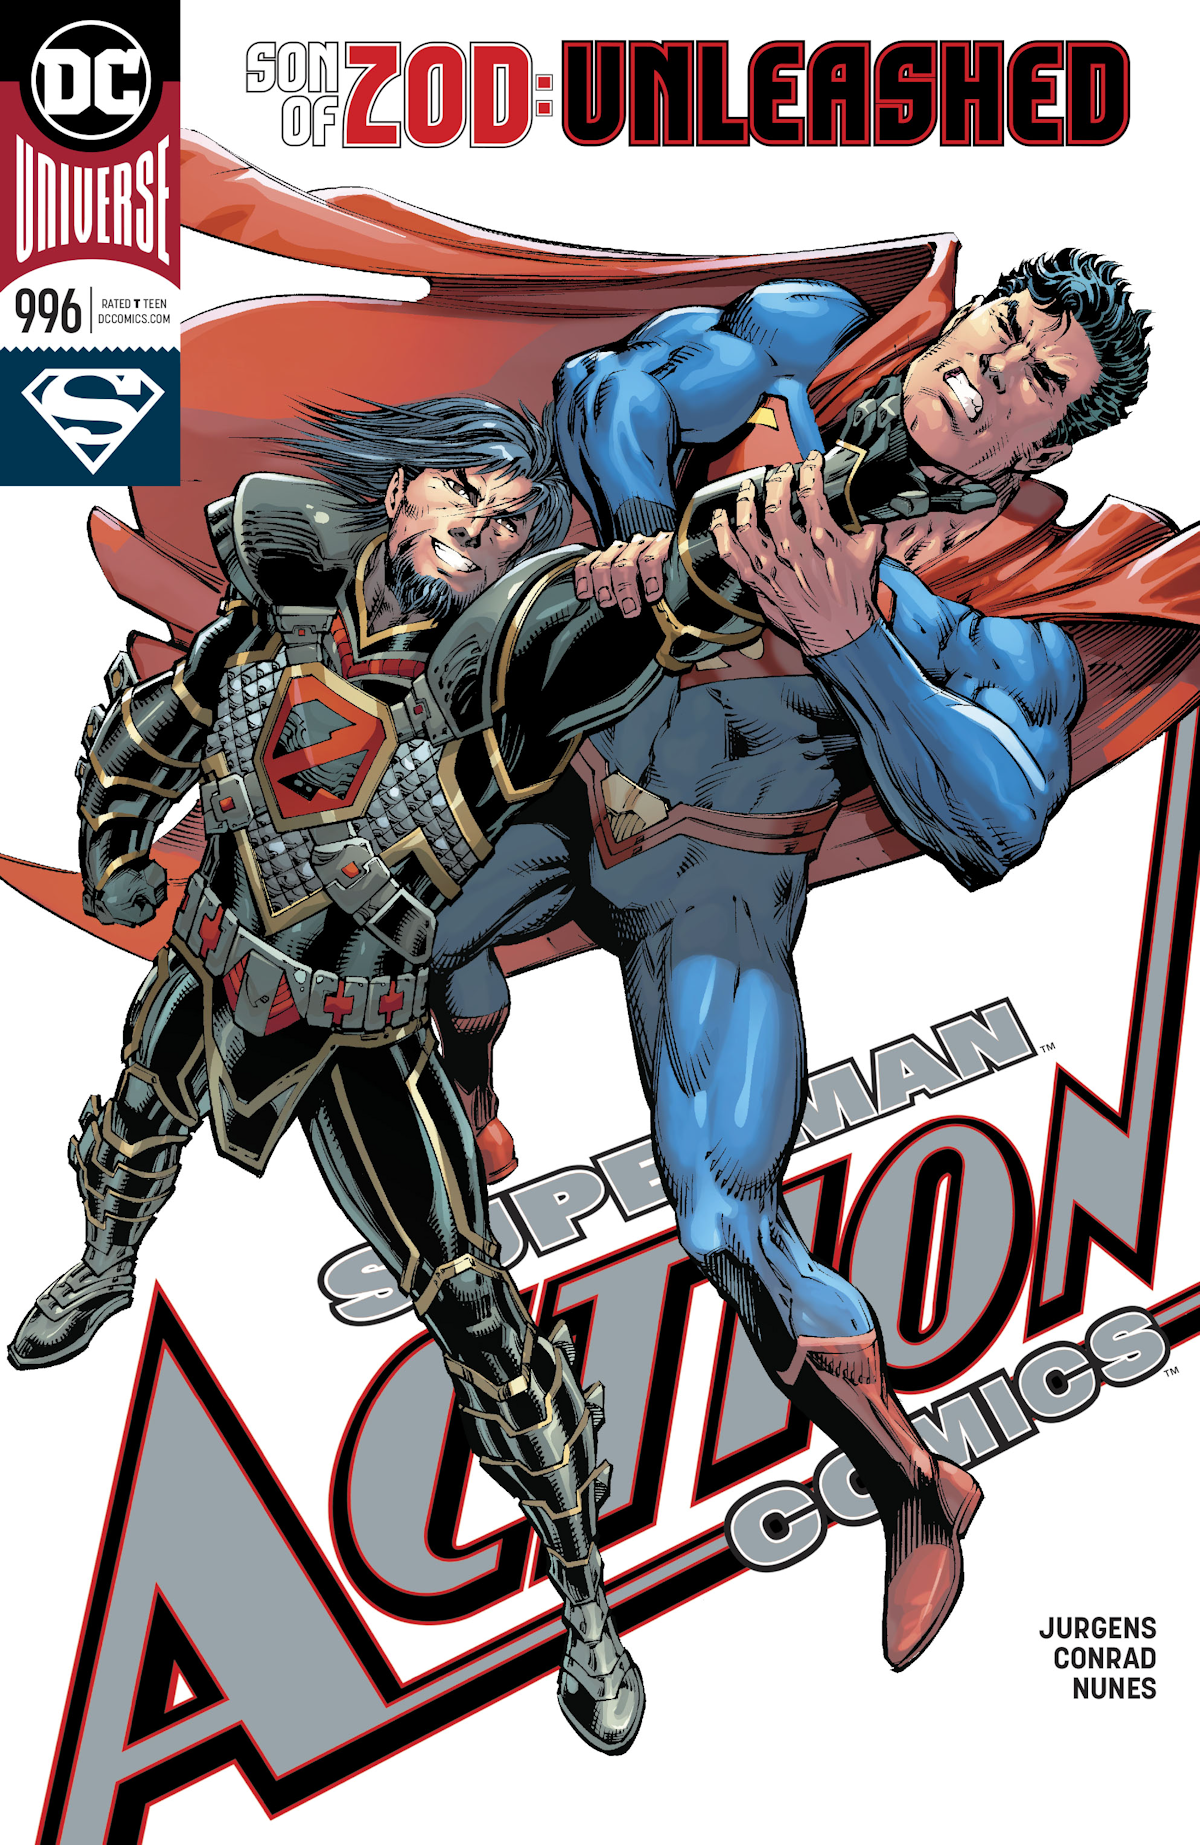 Action Comics 996 (Cover A)